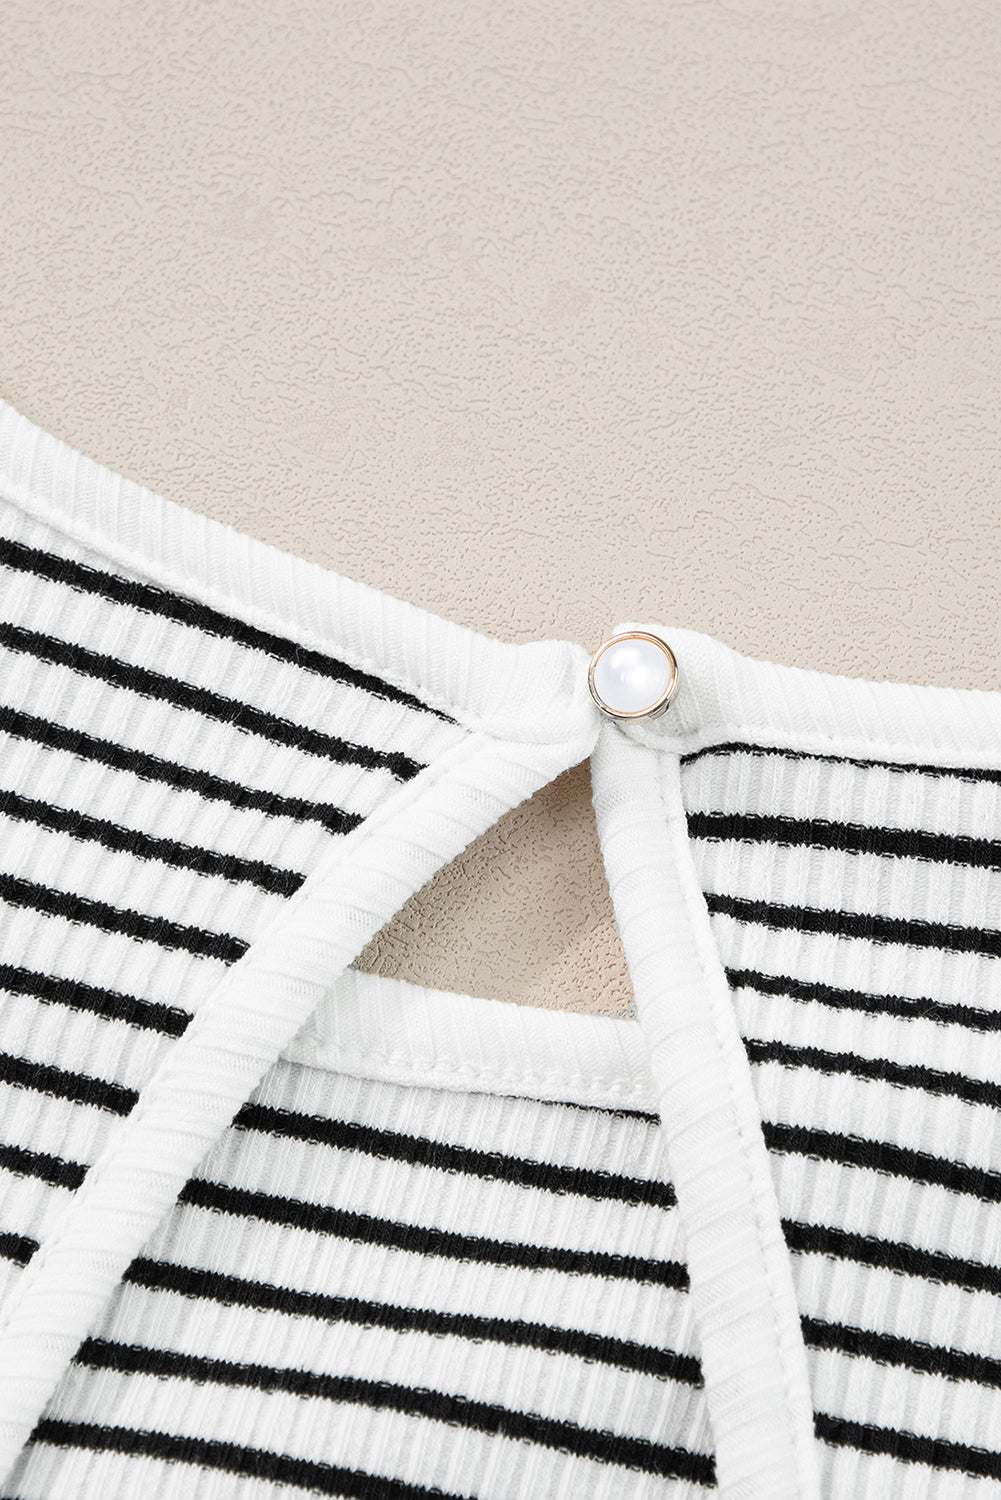 Black Striped Print Ribbed Knit Sleeveless Top